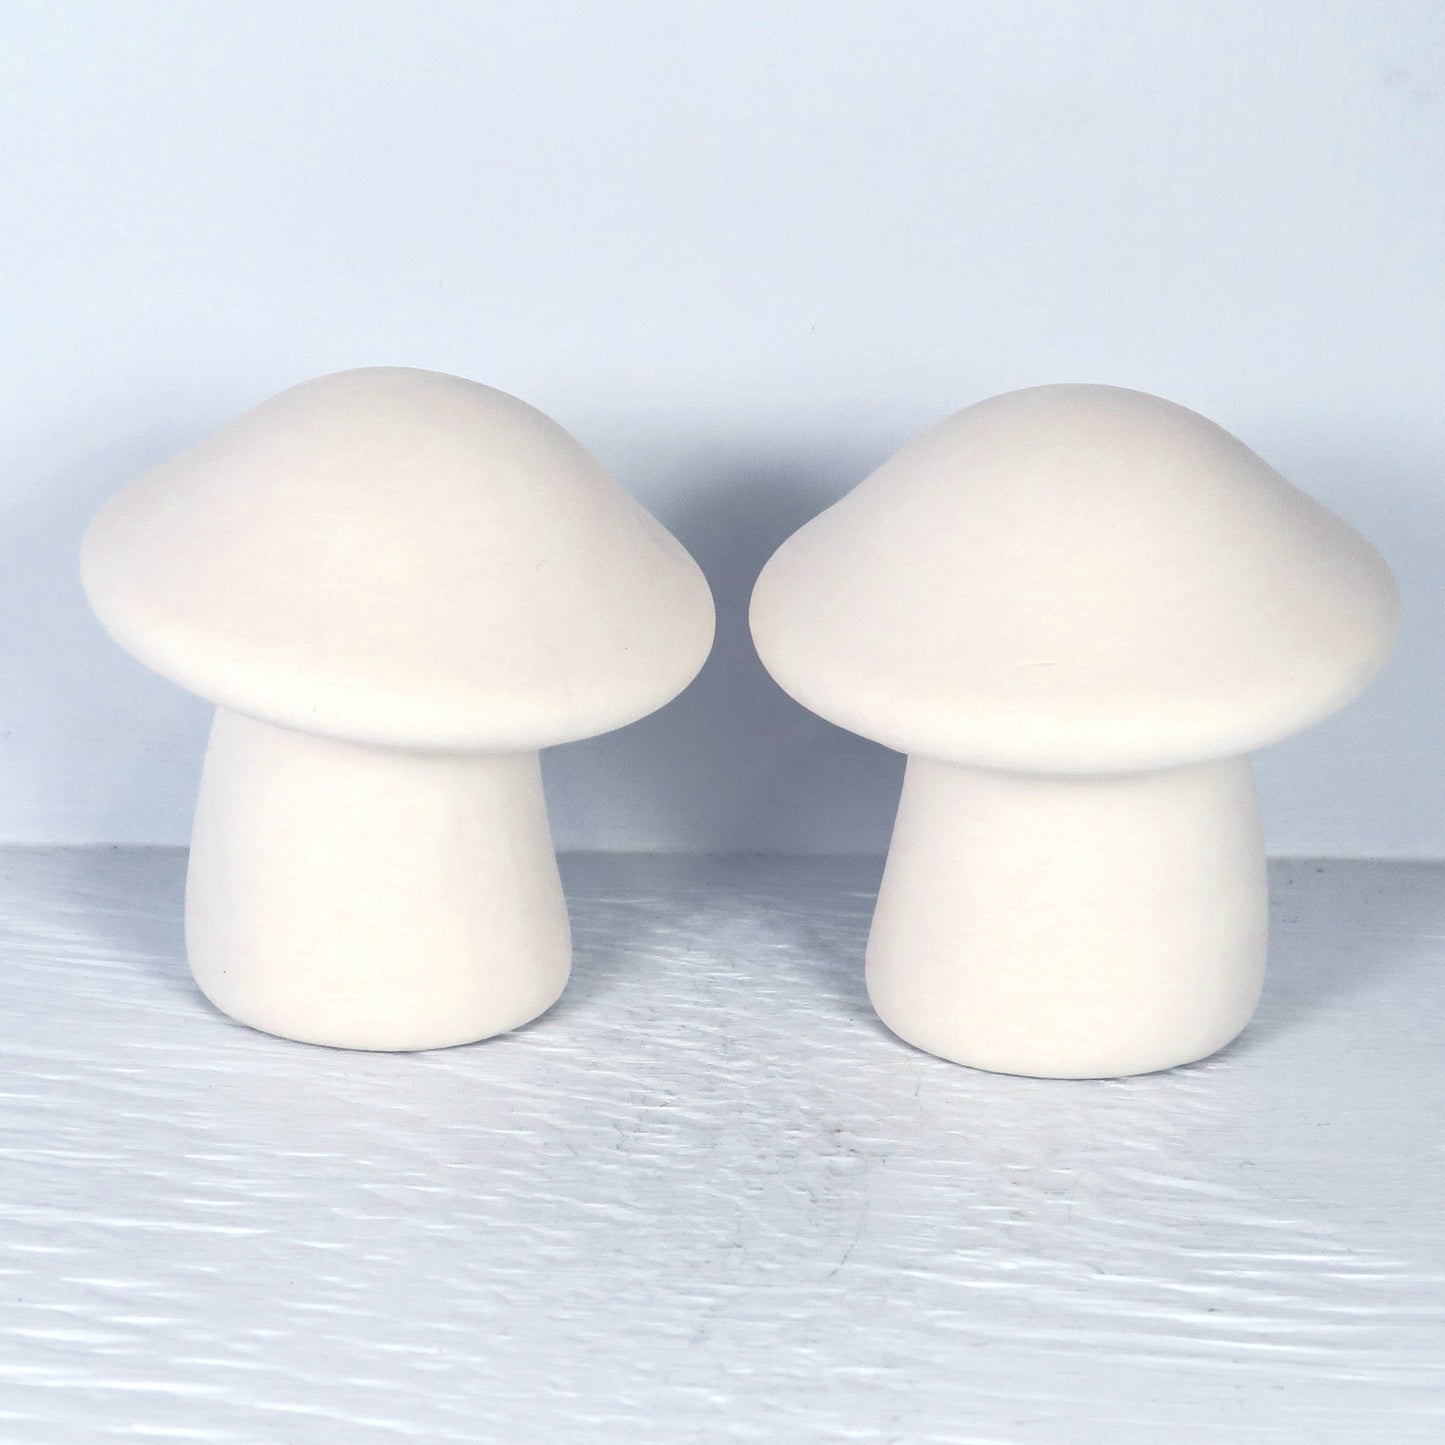 Handmade Ready To Paint Ceramic Mushroom Figurines / Set of 2 Mushroom Statues / Ceramics to Paint / Paintable Ceramic Mushrooms / Retro